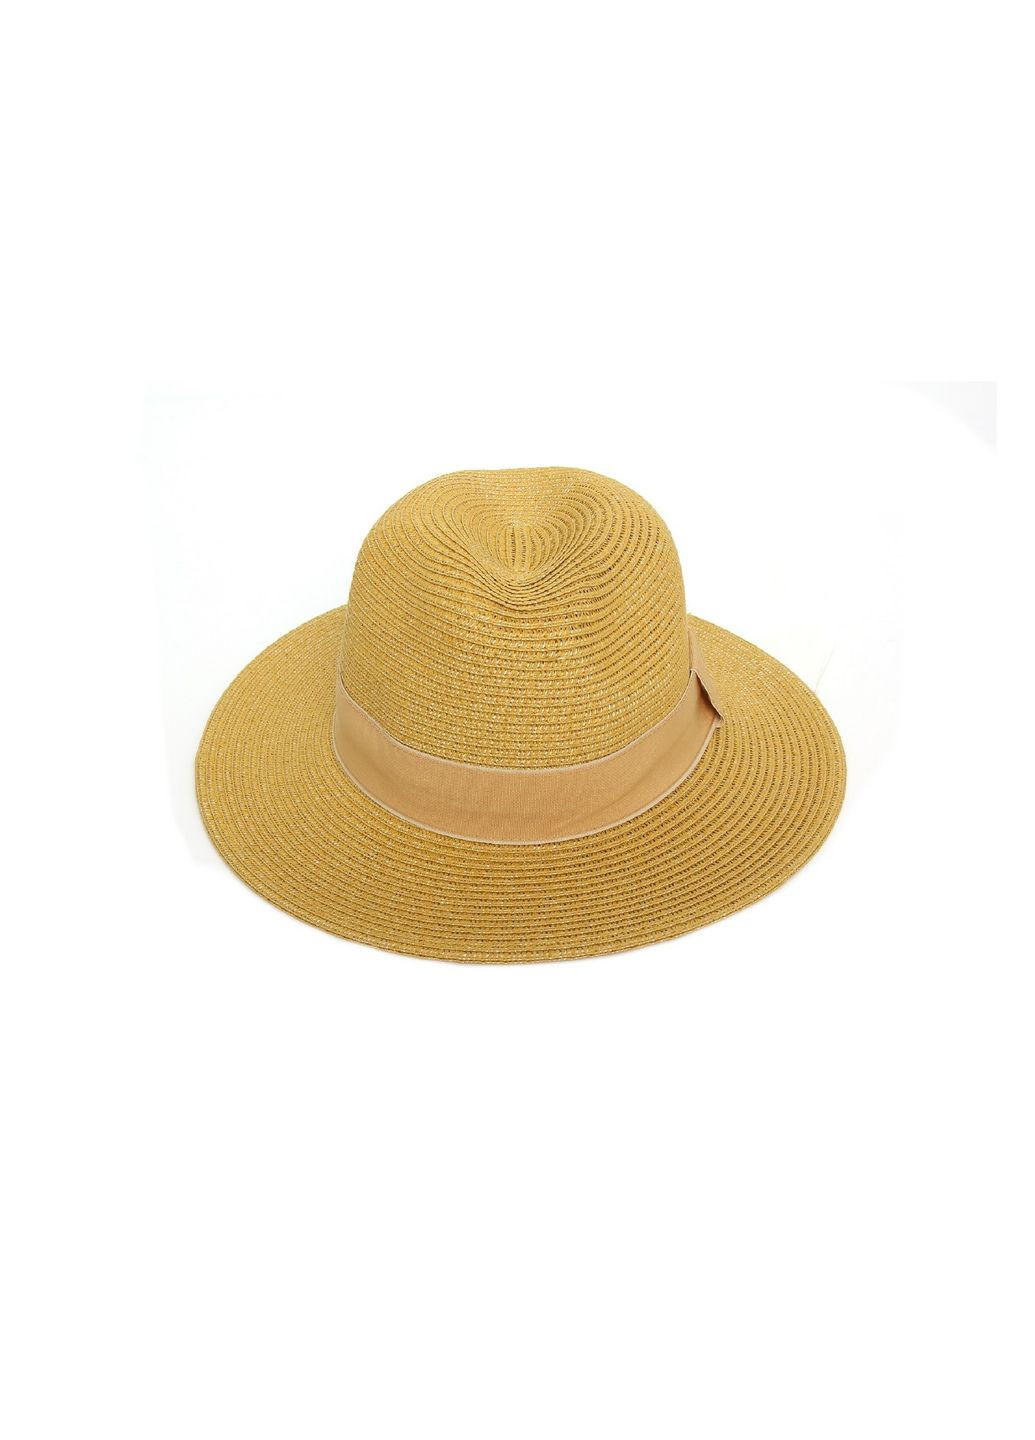 Шляпа федора женская бумага желтая AVA LuckyLOOK 376-725 (289478309)